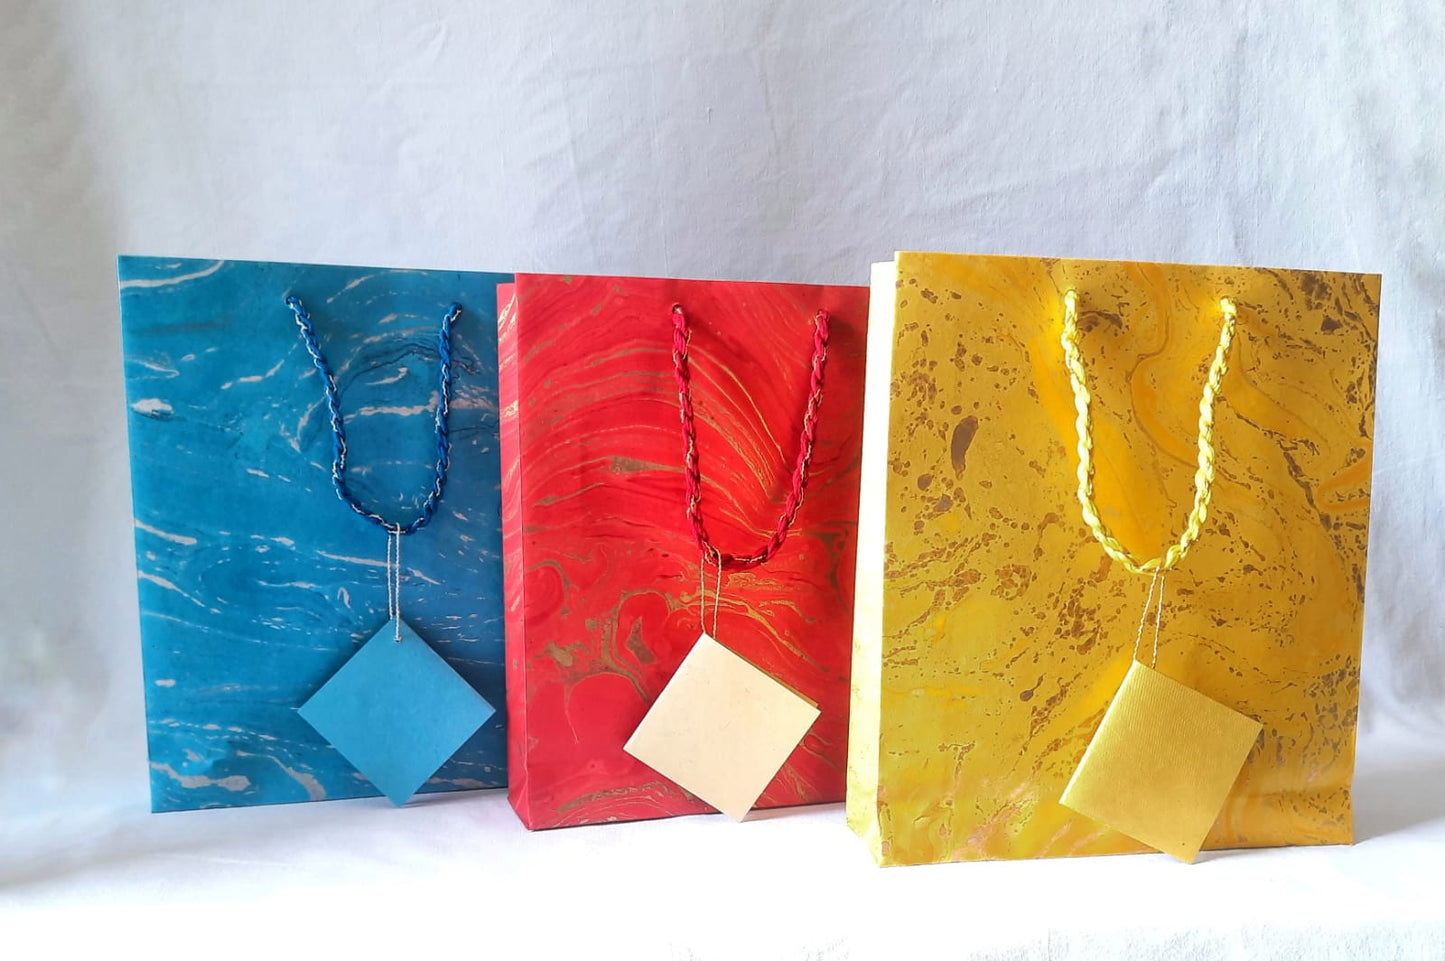 Eco-friendly Handmade Paper Medium Gift Bags